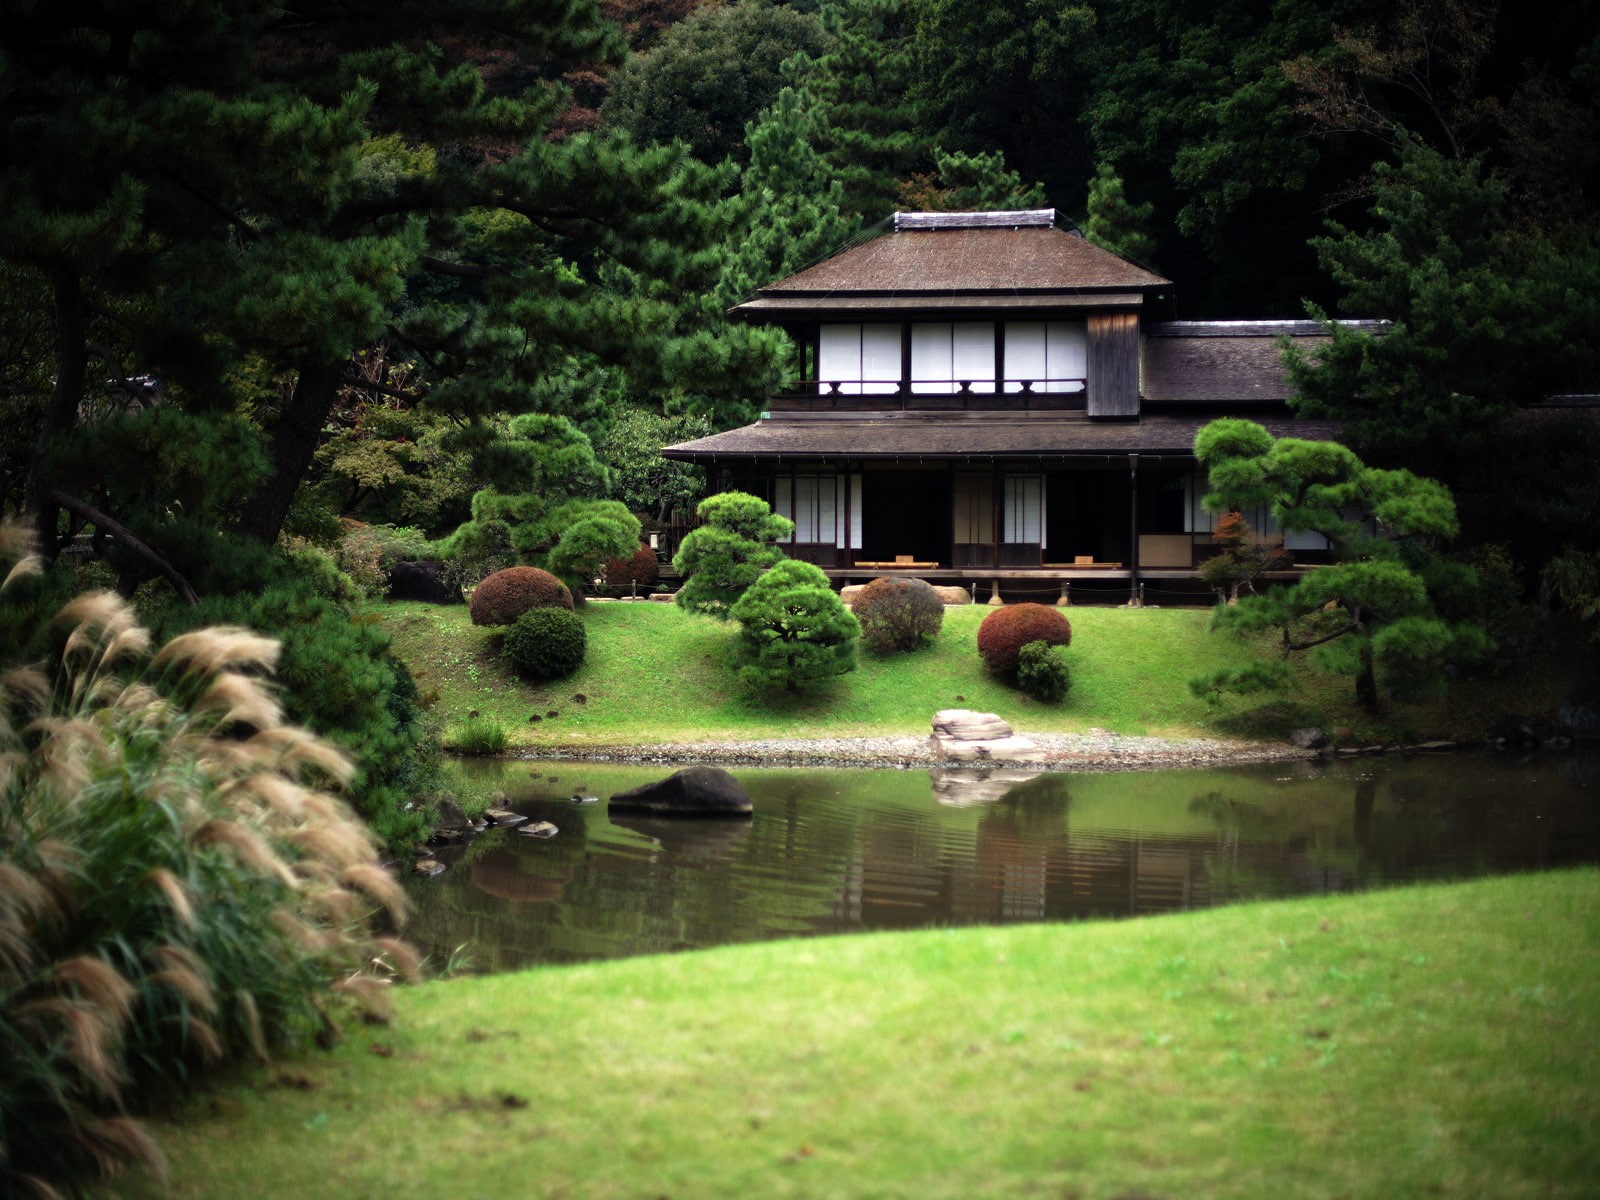 Japan, garden, house, plant, tree, water, built structure, architecture